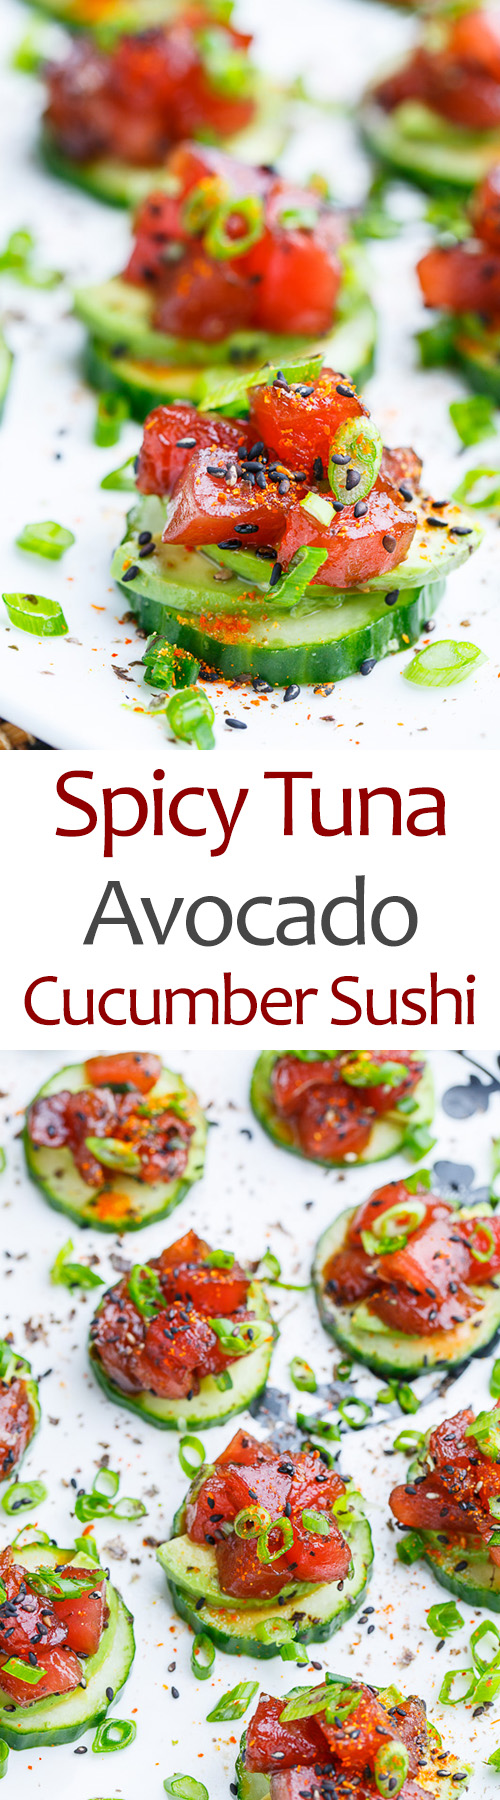 Spicy Tuna and Avocado Cucumber Sushi Bites